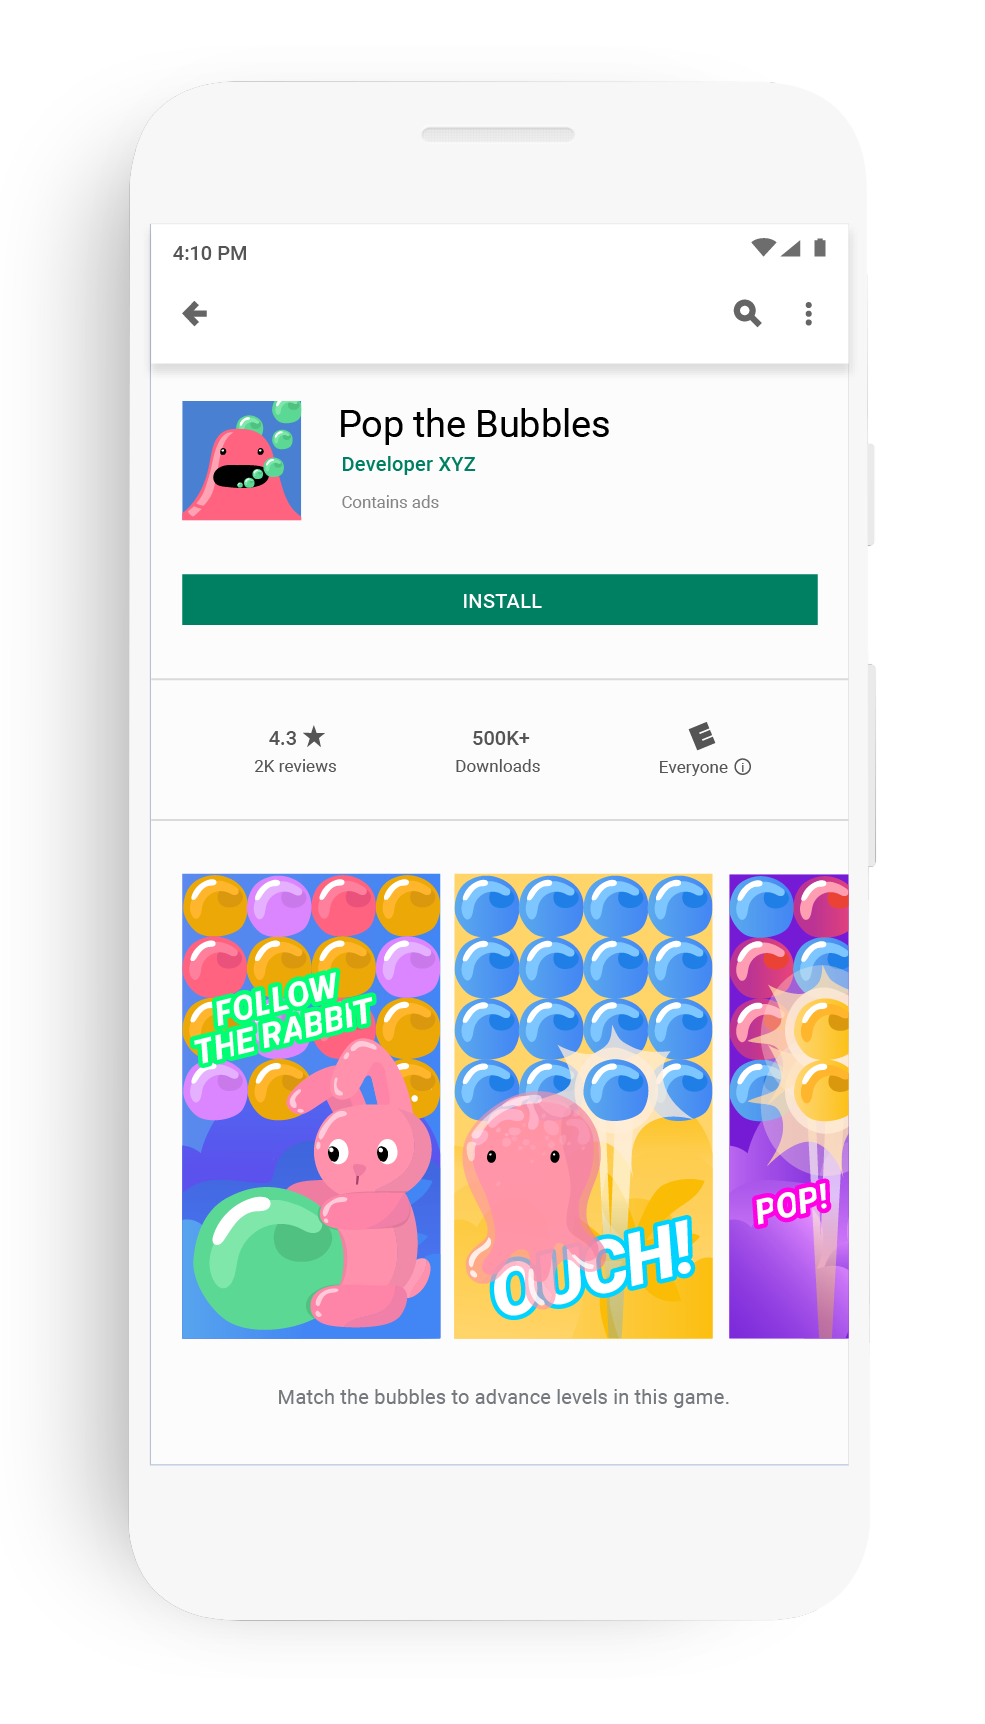 Telefone Para Bebês – Apps no Google Play